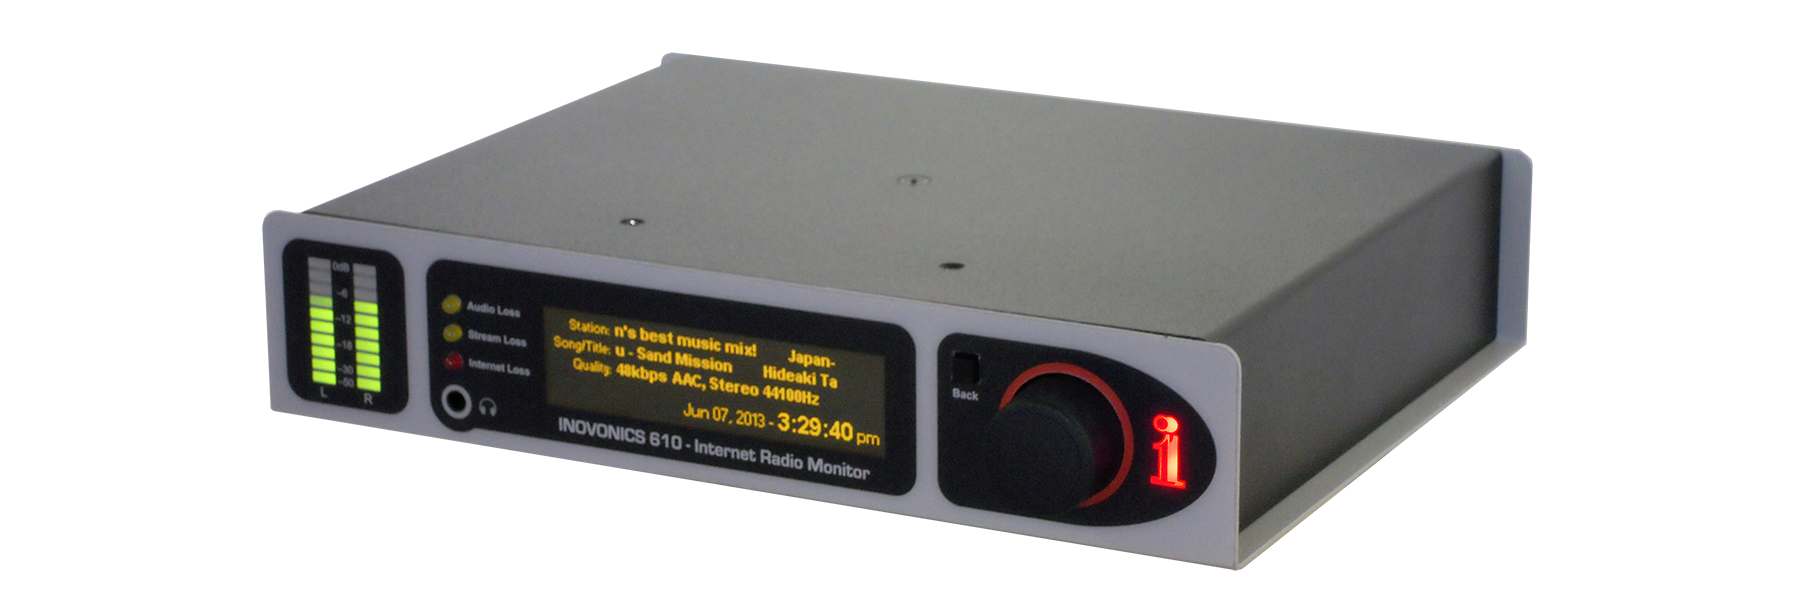 Model 610 Internet Radio Monitor - インターネットラジオモニター